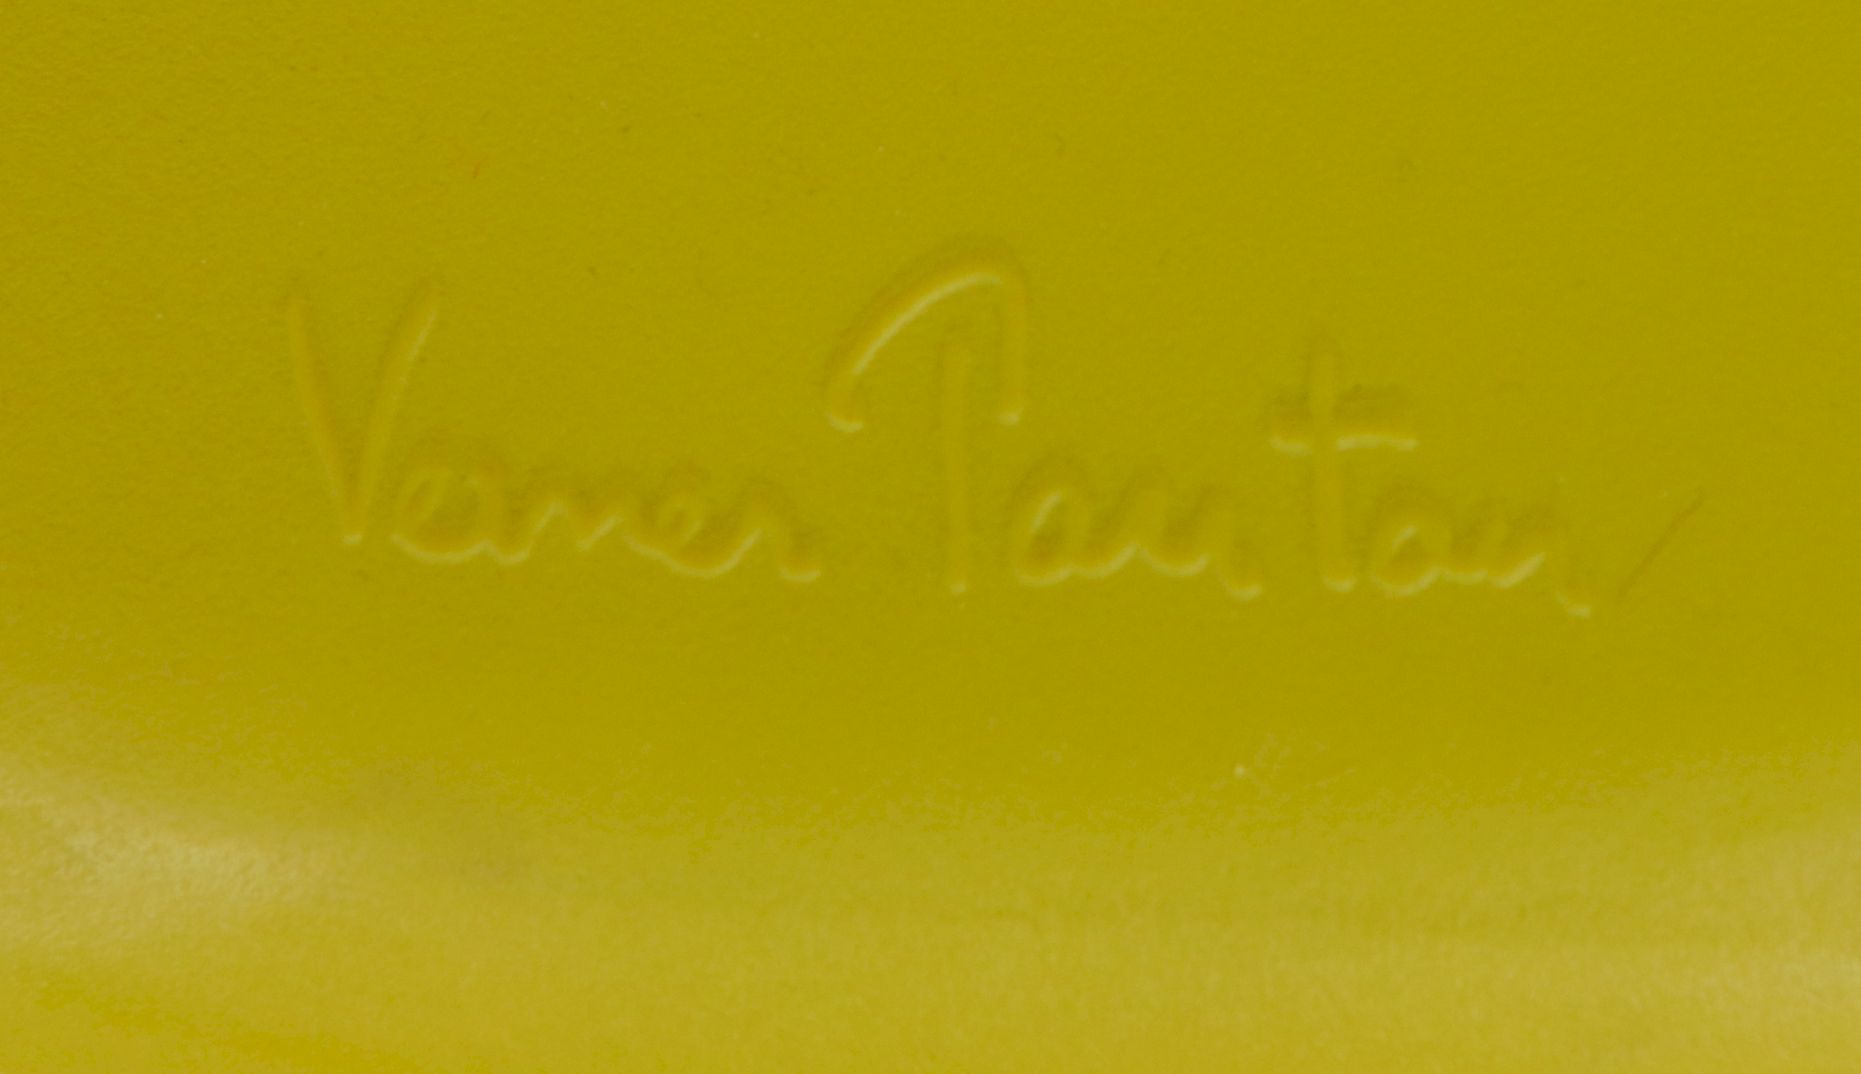 4 VITRA Verner PANTON ¨Panton chairs¨ - Image 3 of 3